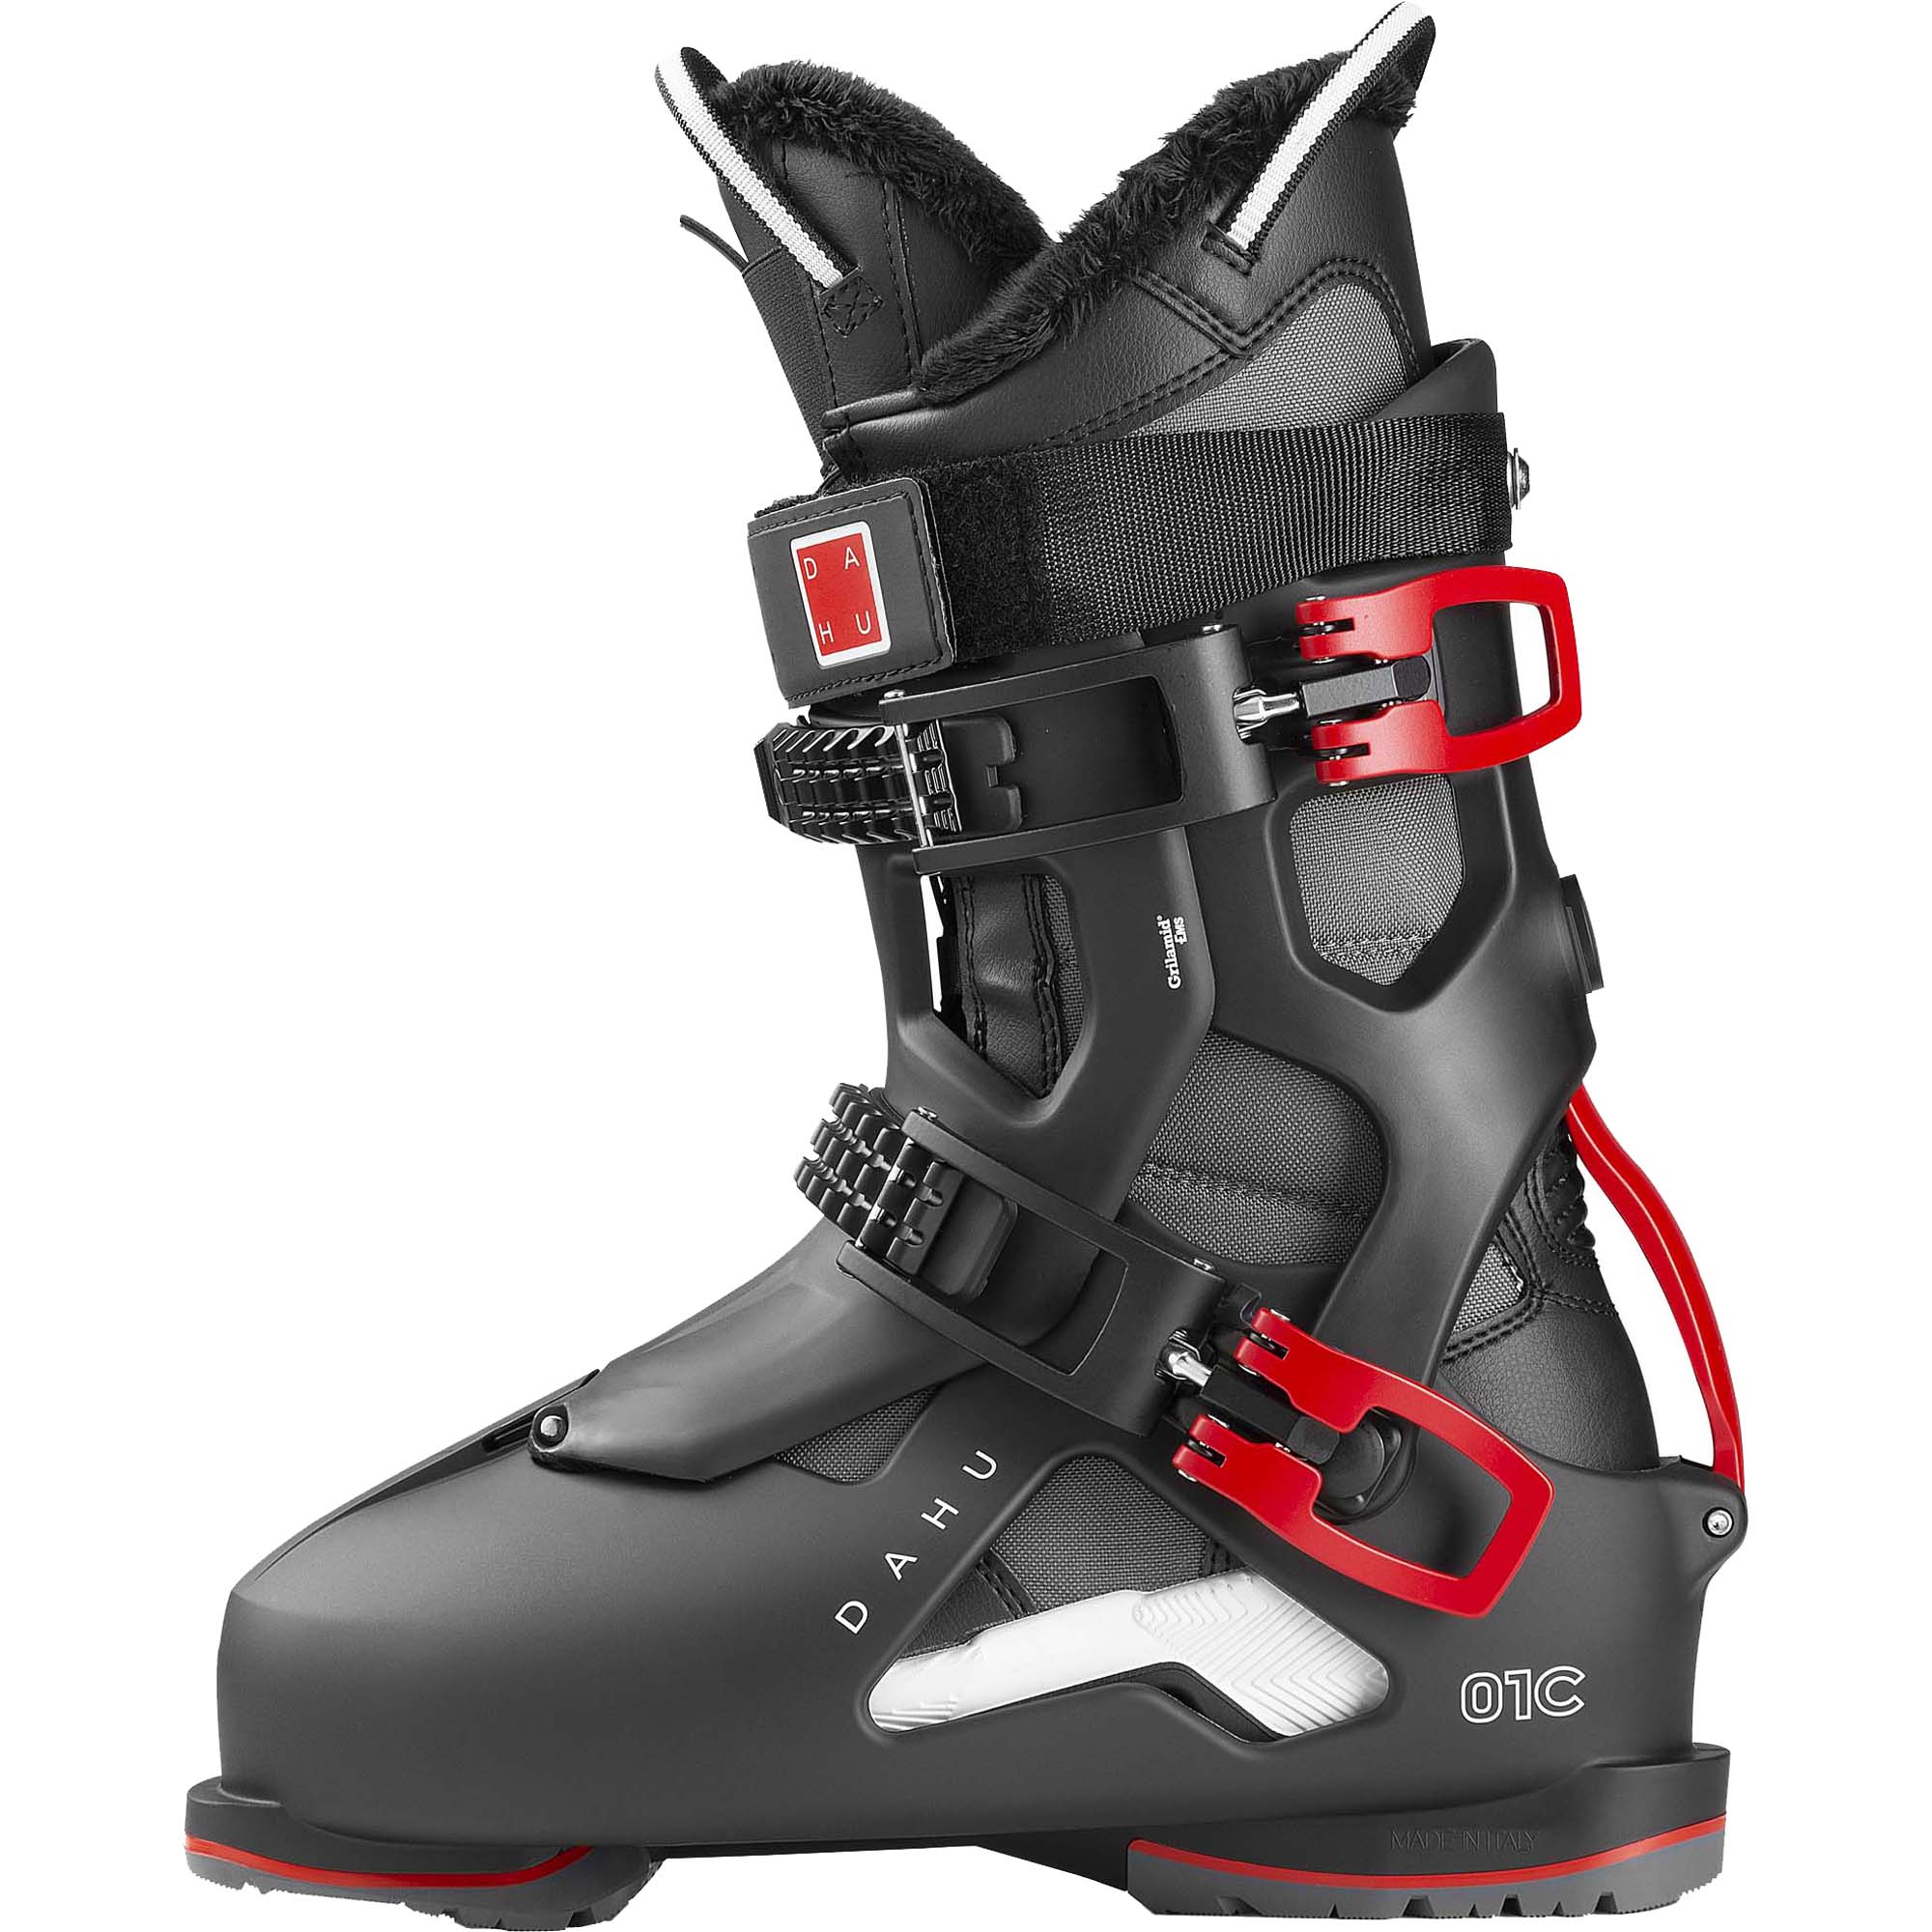 DAHU Ecorce 01C Ski Boots